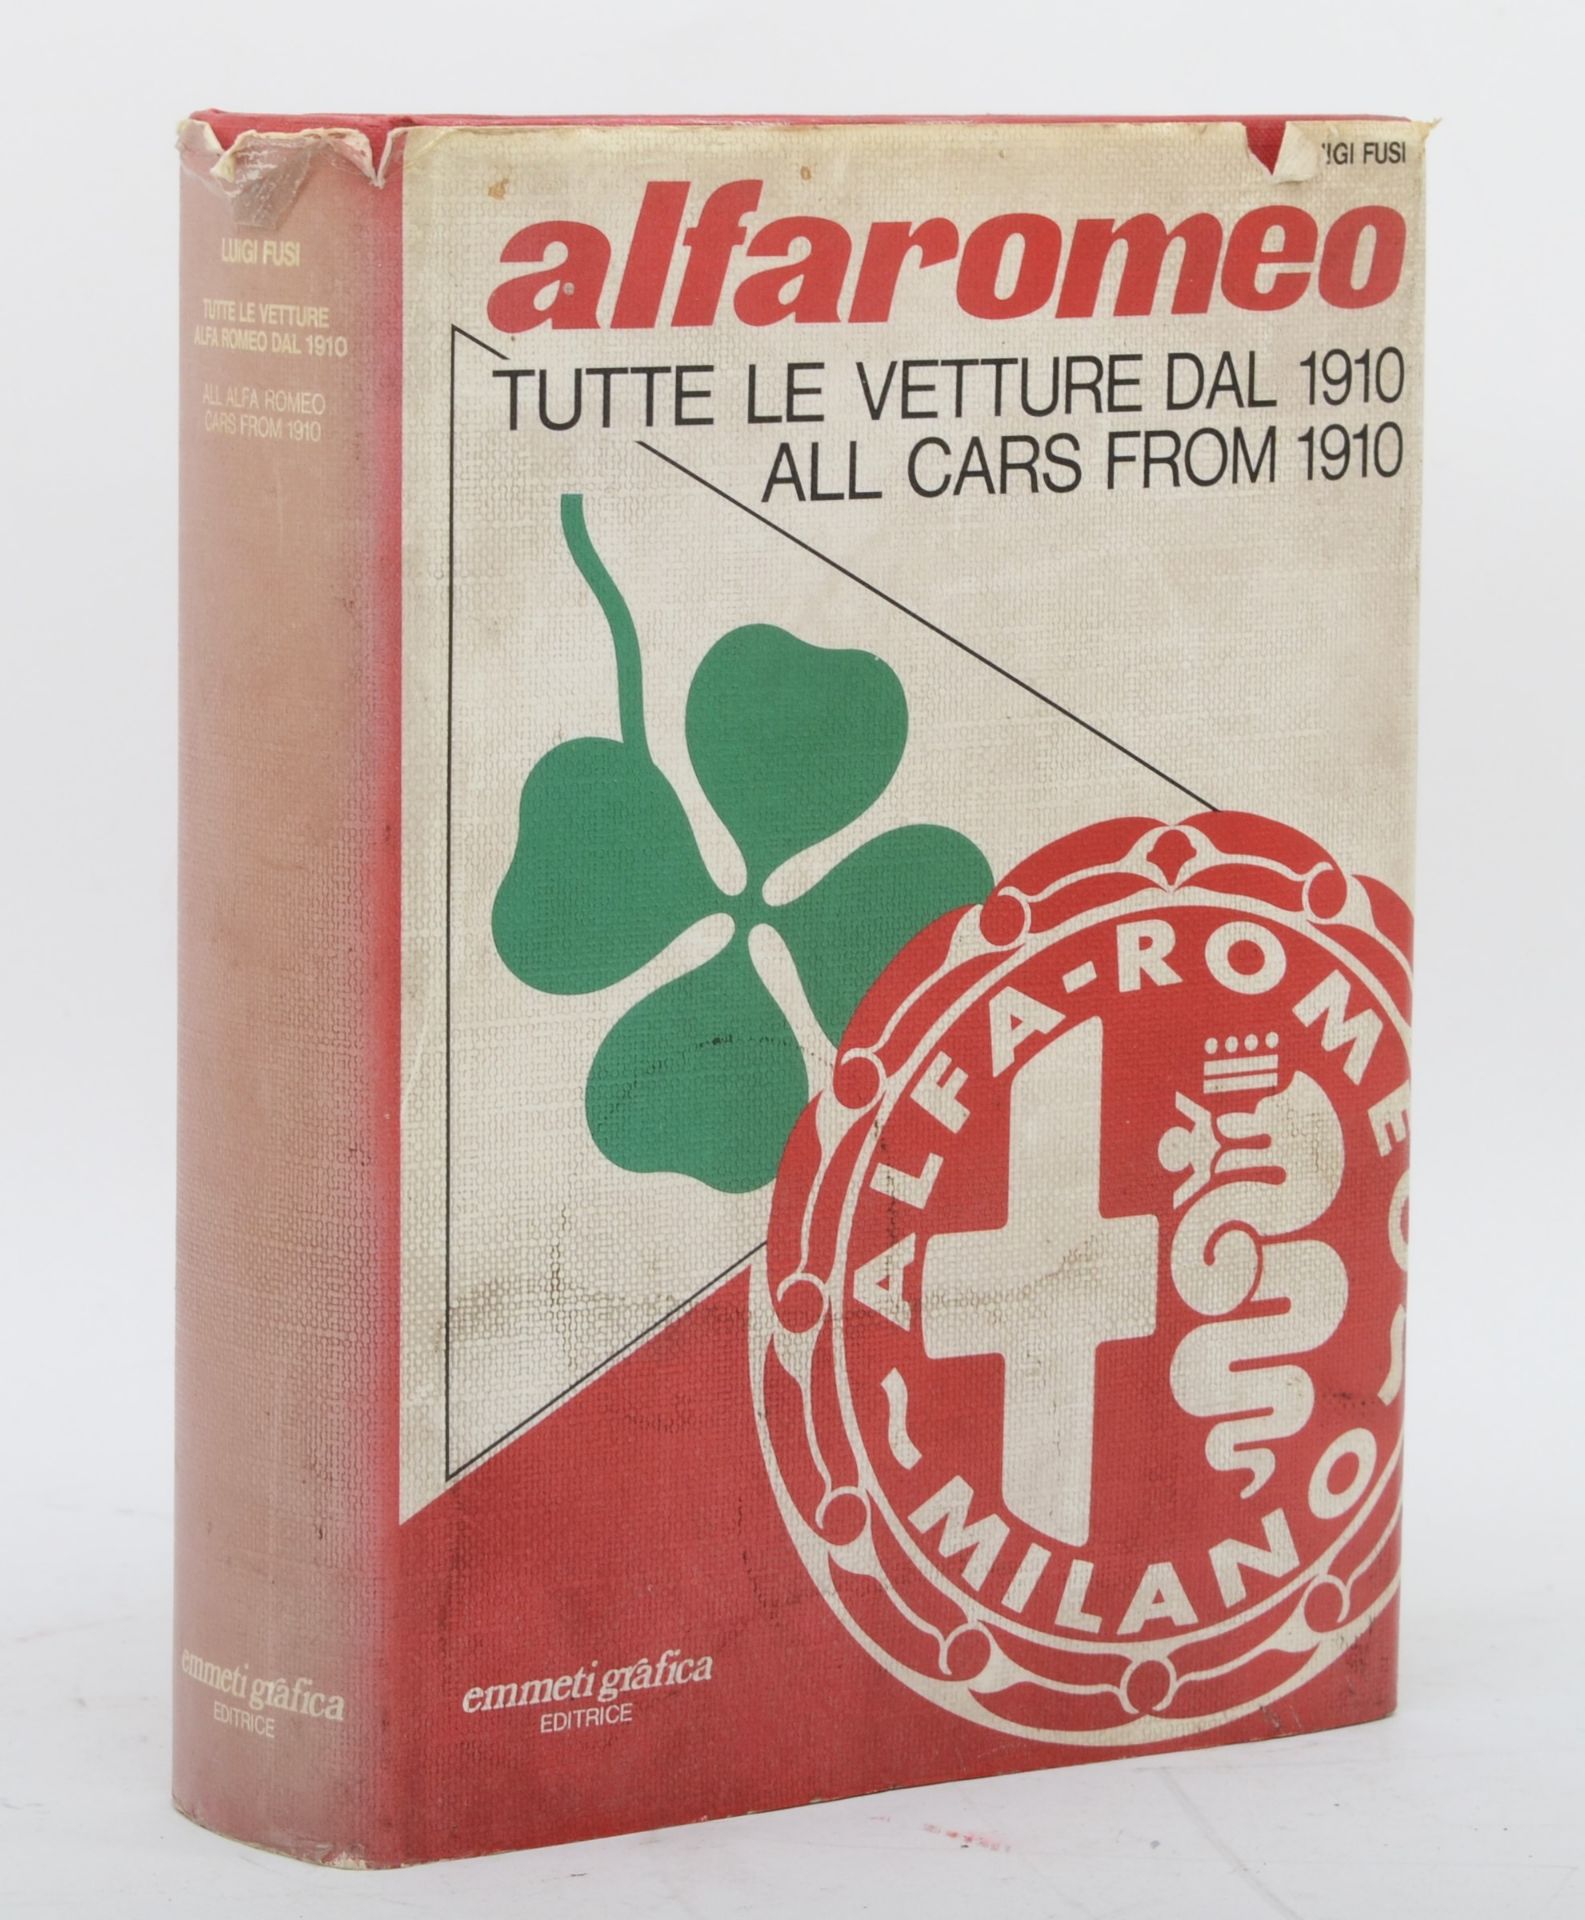 Alfa Romeo – All Cars from 1910 by Luigi Fusi, 1978, in English and Italian